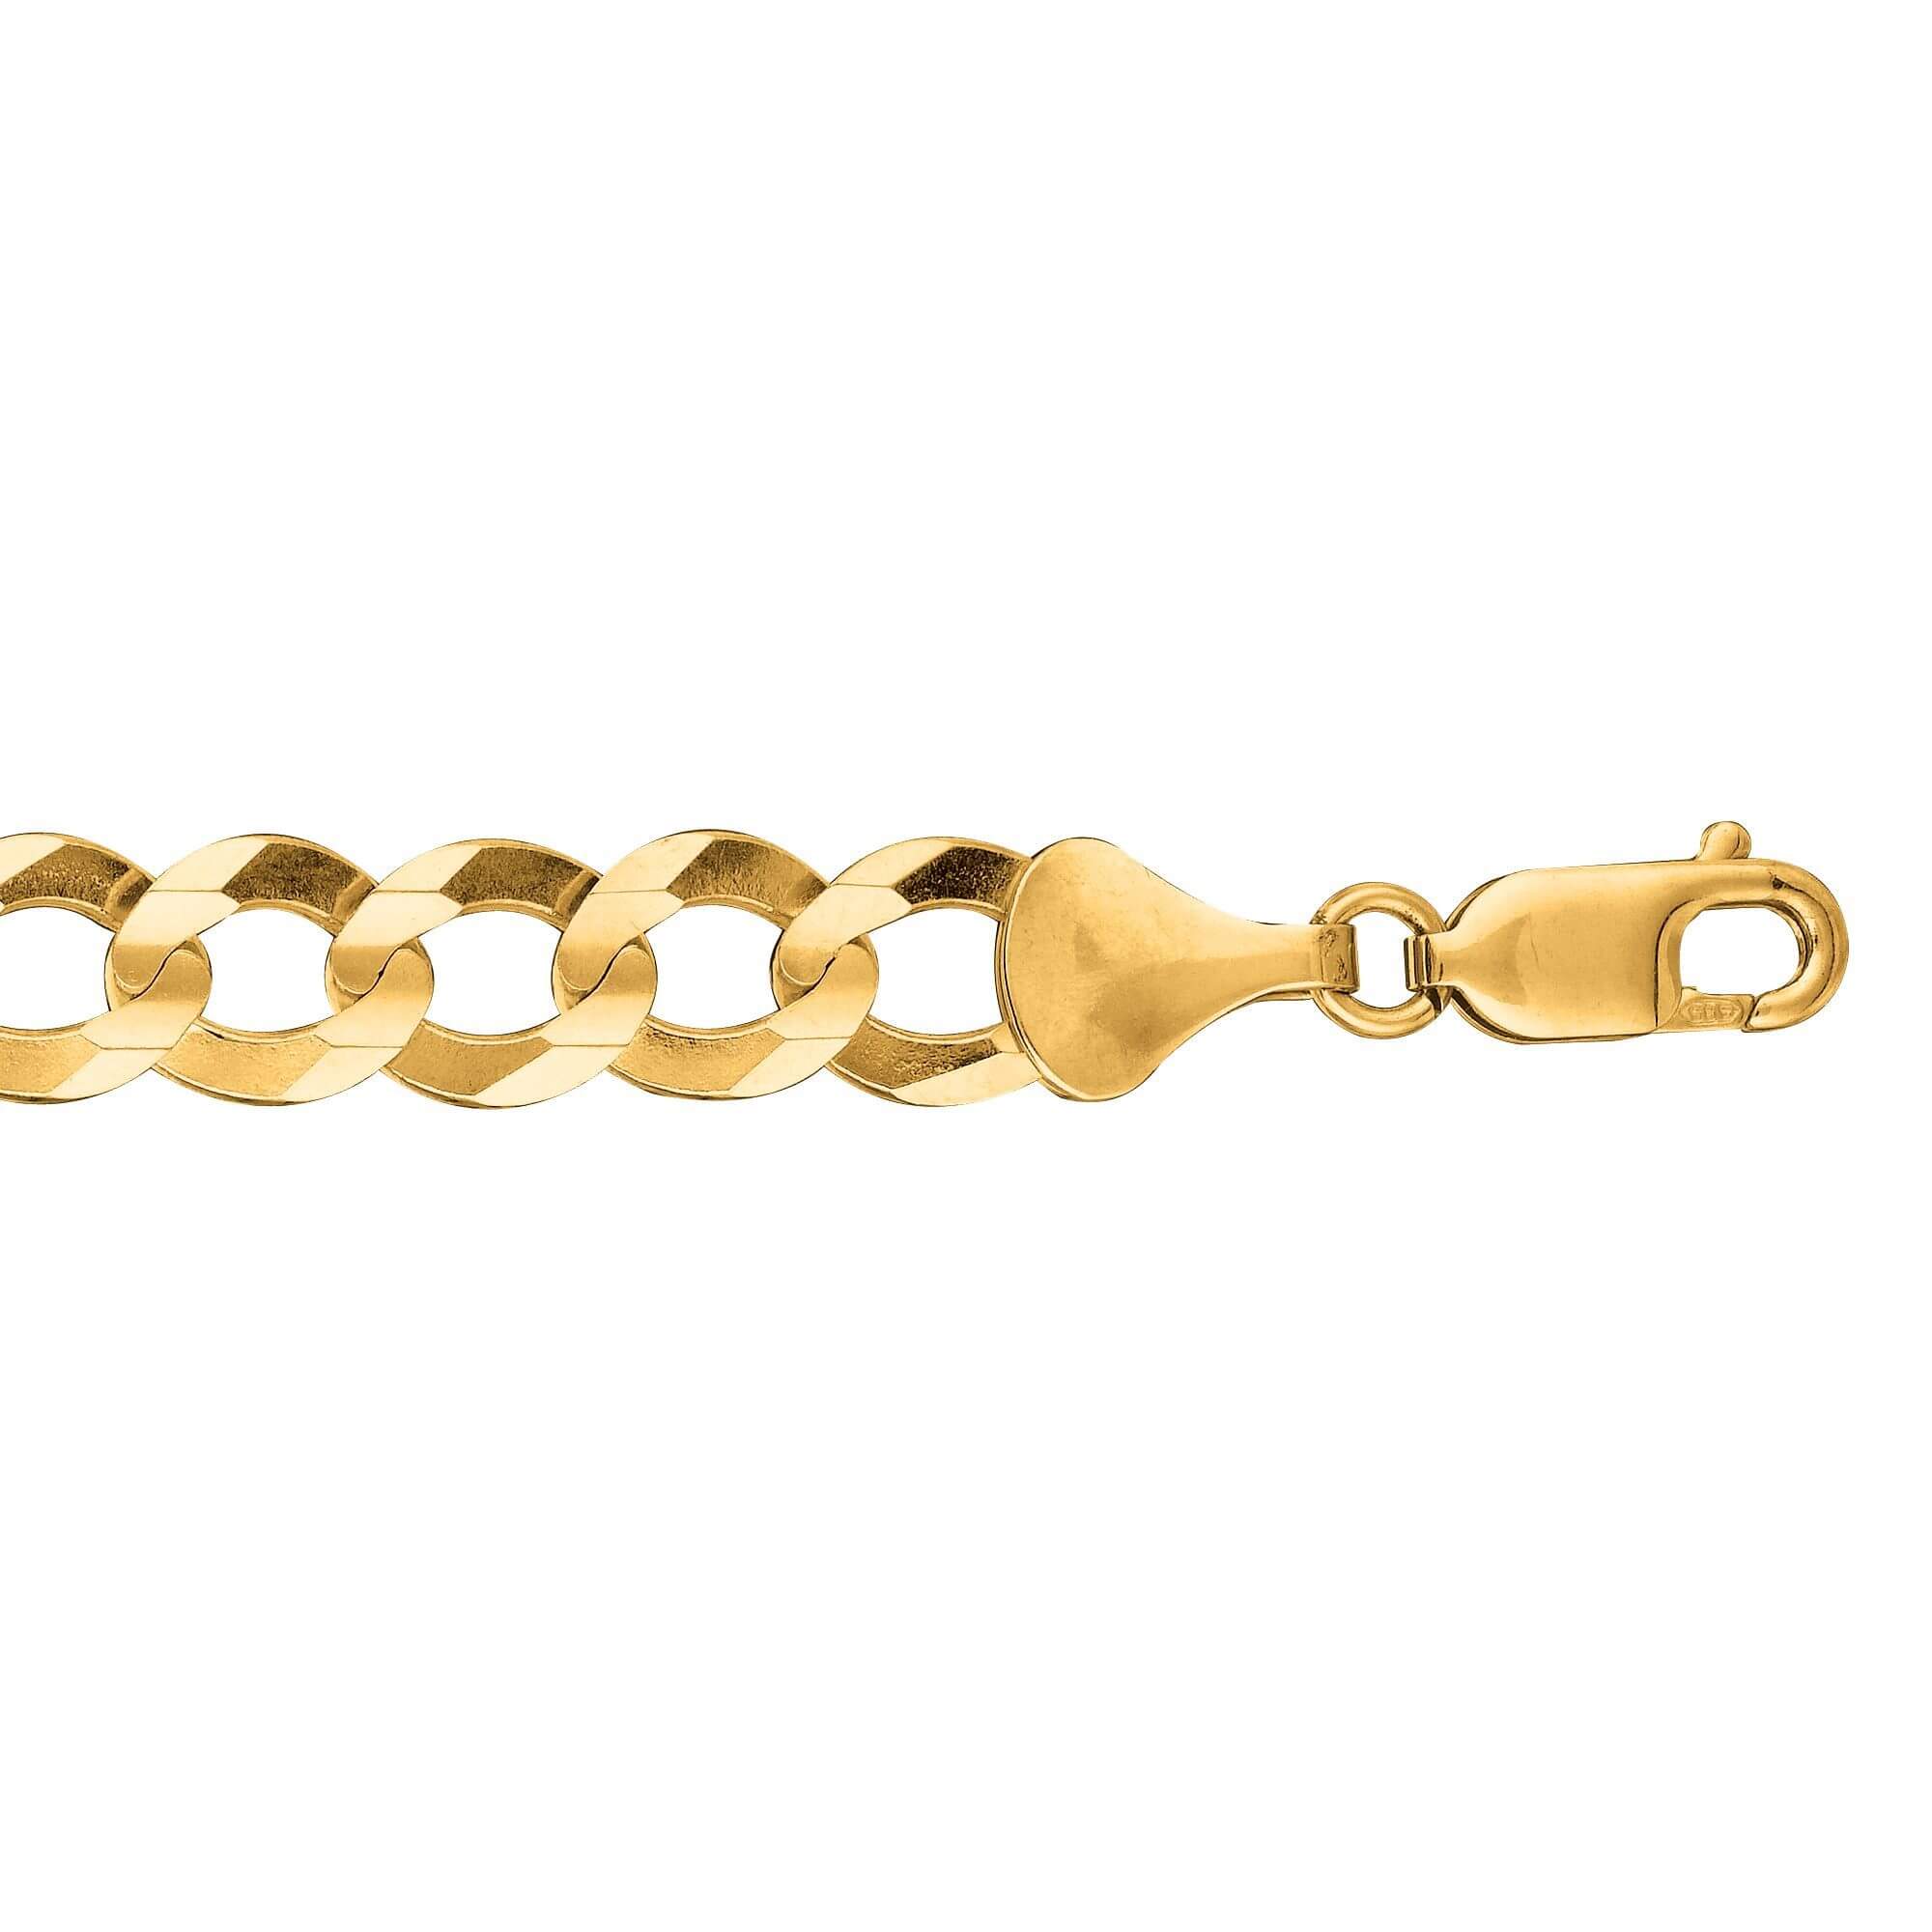 14K Yellow Gold 5.7mm Diamond-Cut Comfort Curb Chain Bracelet - 8